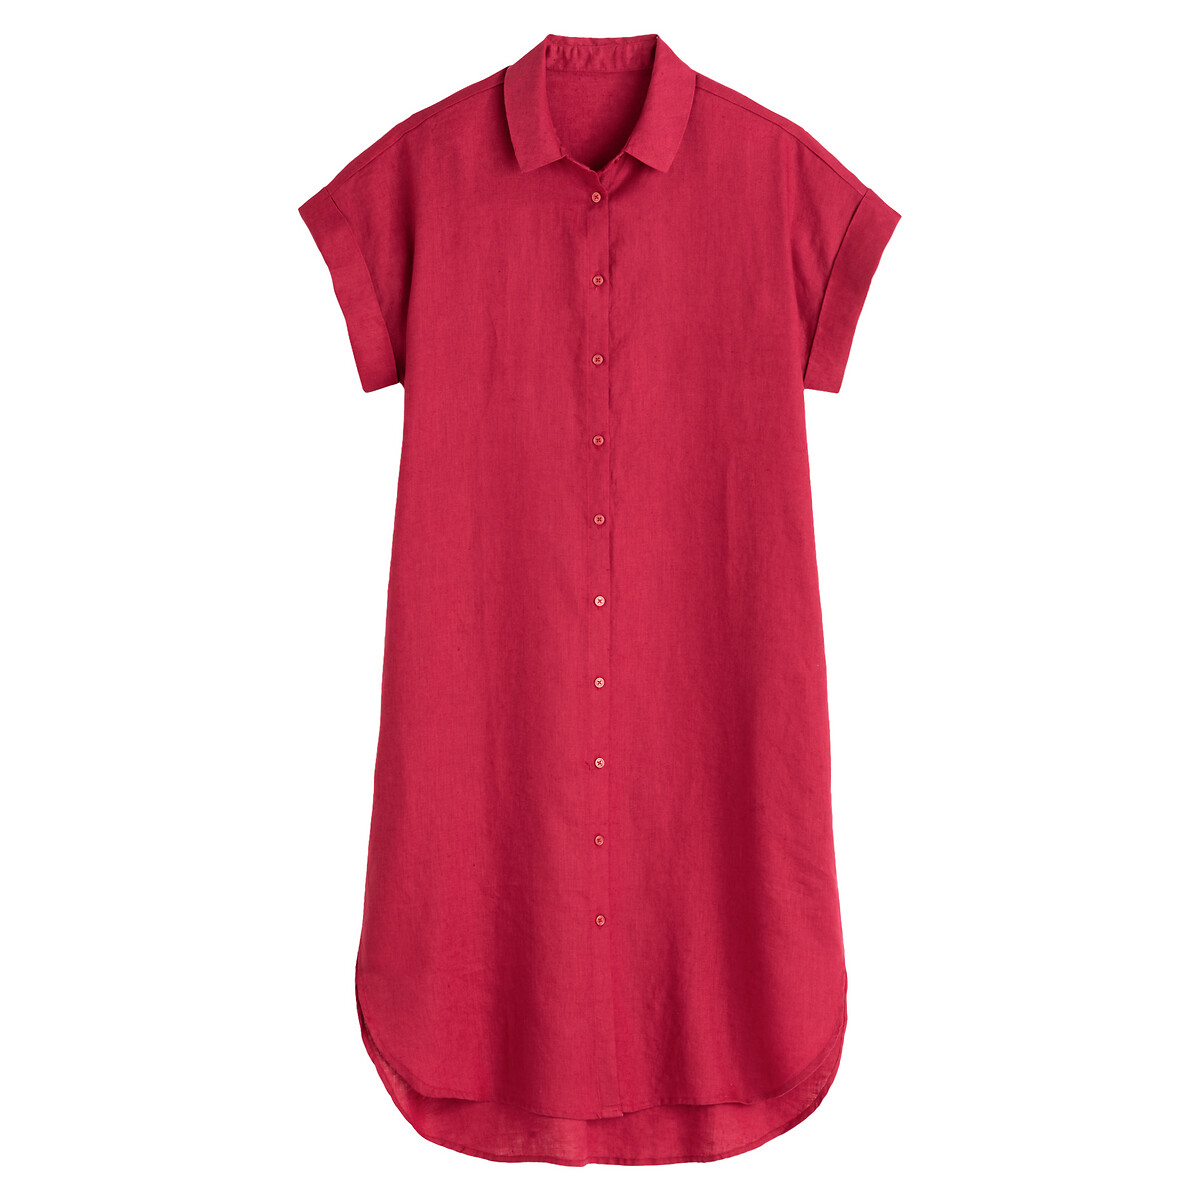 Платье-рубашка LaRedoute С короткими рукавами из льна 34 (FR) - 40 (RUS) розовый, размер 34 (FR) - 40 (RUS) С короткими рукавами из льна 34 (FR) - 40 (RUS) розовый - фото 5